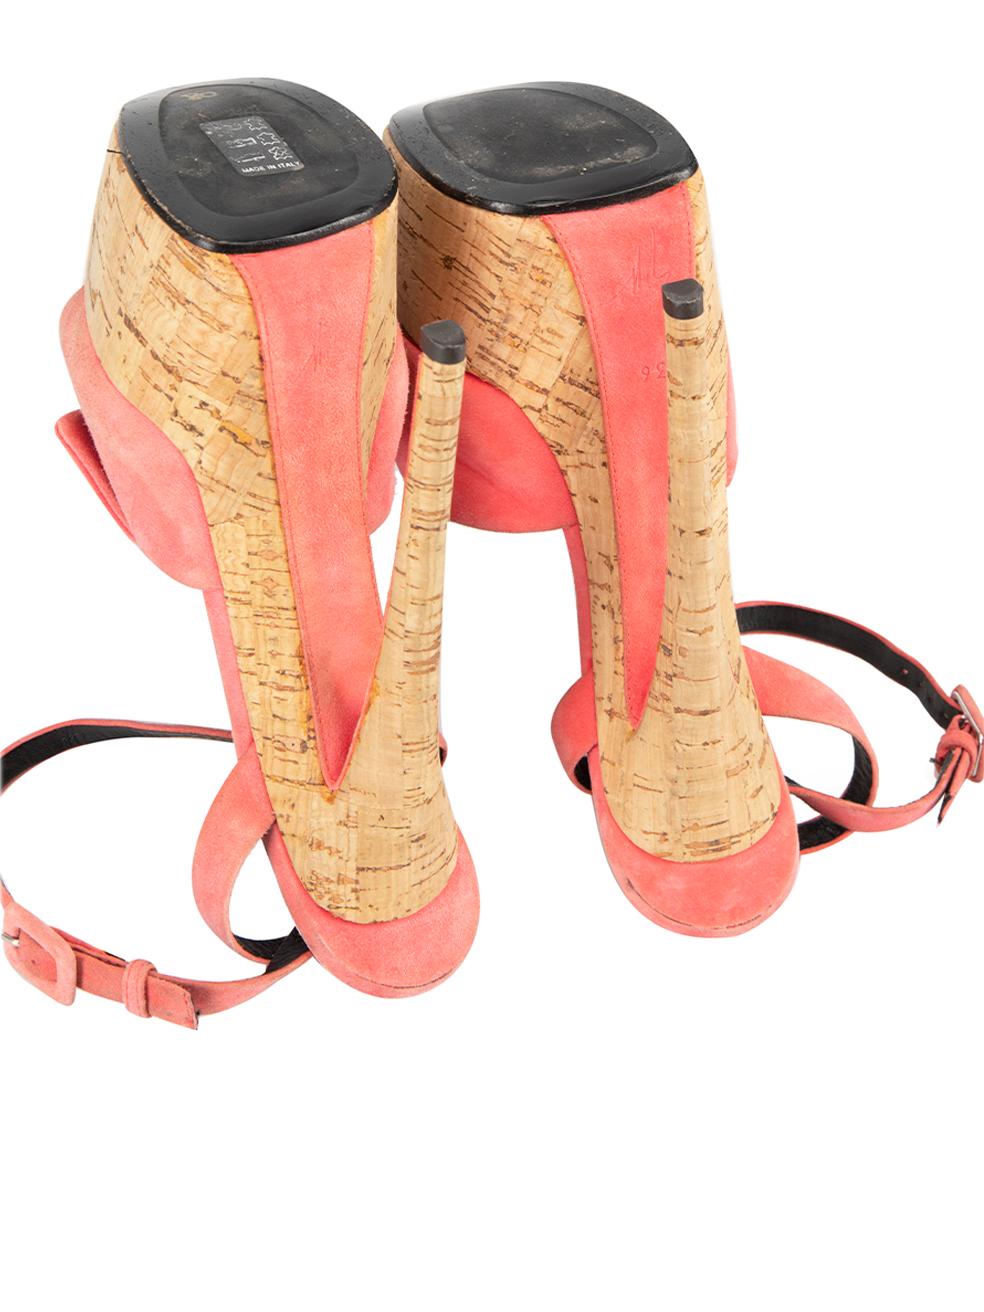 Giuseppe Zanotti Women's Pink Suede Cork Platform Heel Sandals For Sale 1